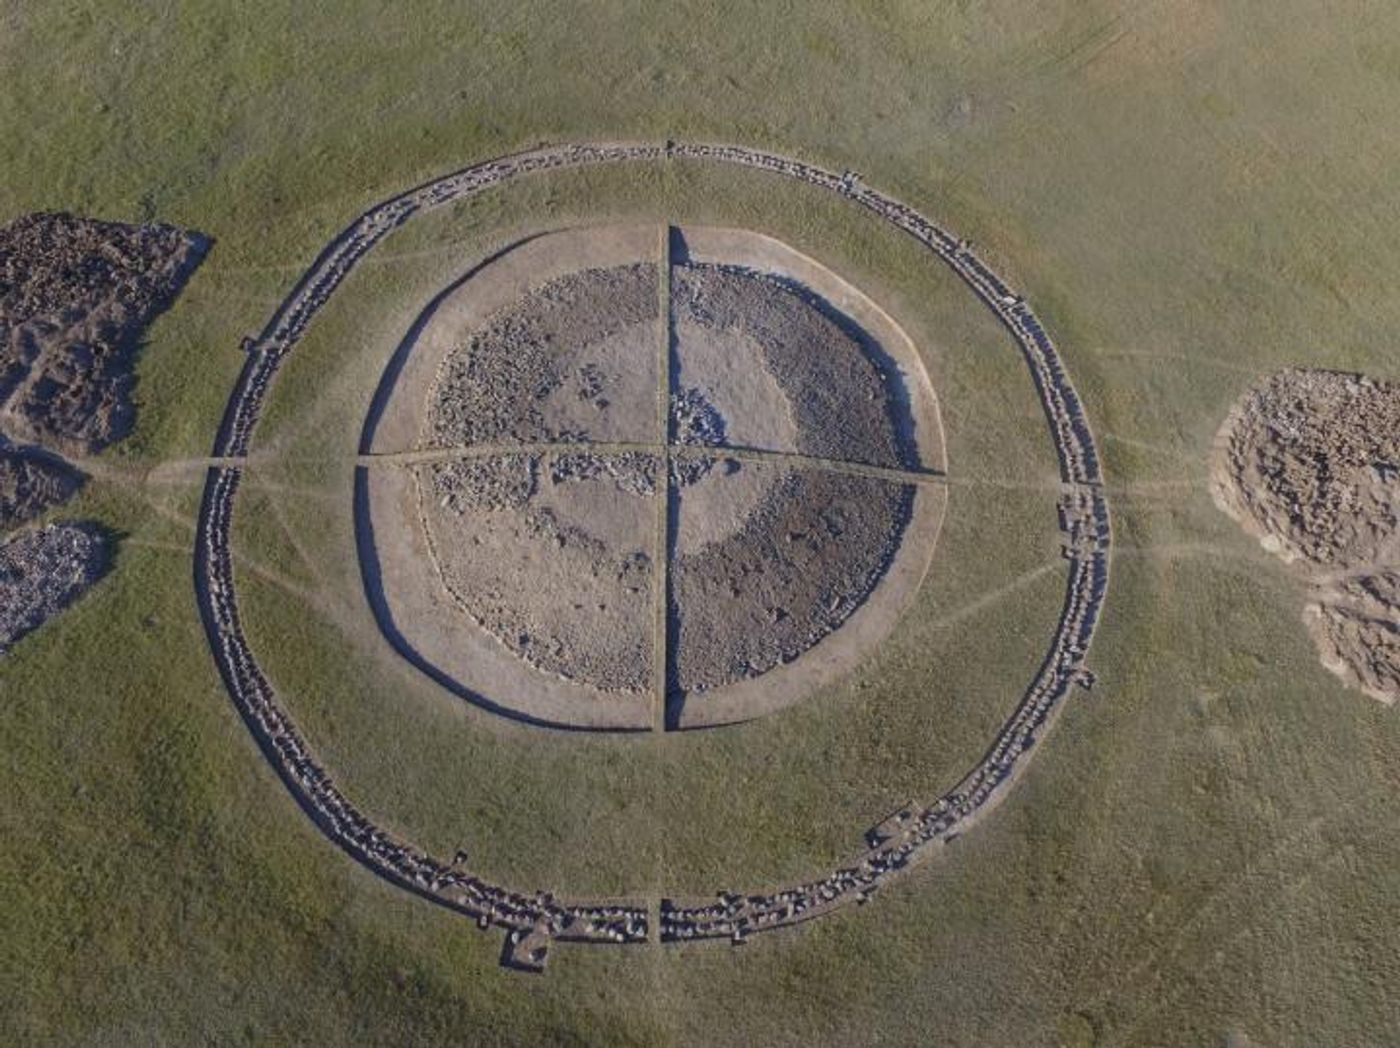 Mound 4 of the Eleke Sazy necropolis in eastern Kazakhstan / Credit: Zainolla Samashev